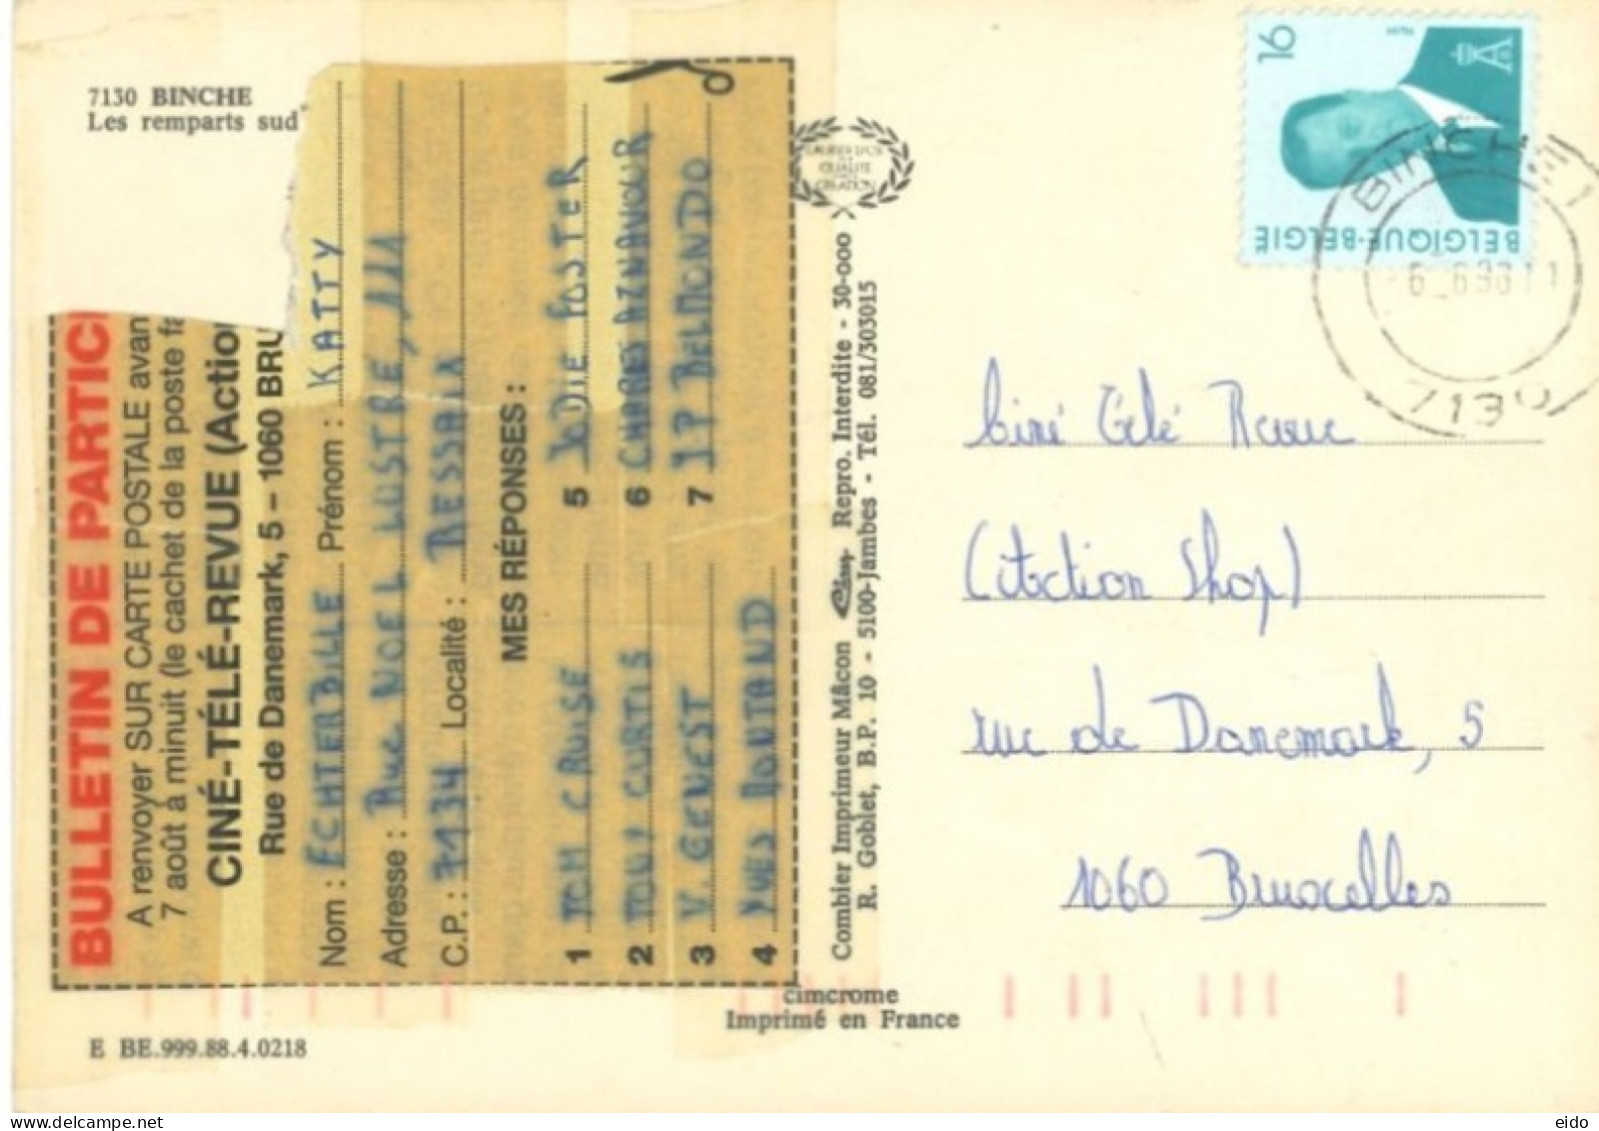 BELGIUM - 1963, BINCHE, LE REMPARTS SUD POSTCARD WITH STAMP SENT TO BRUOCELLES. - Cartas & Documentos